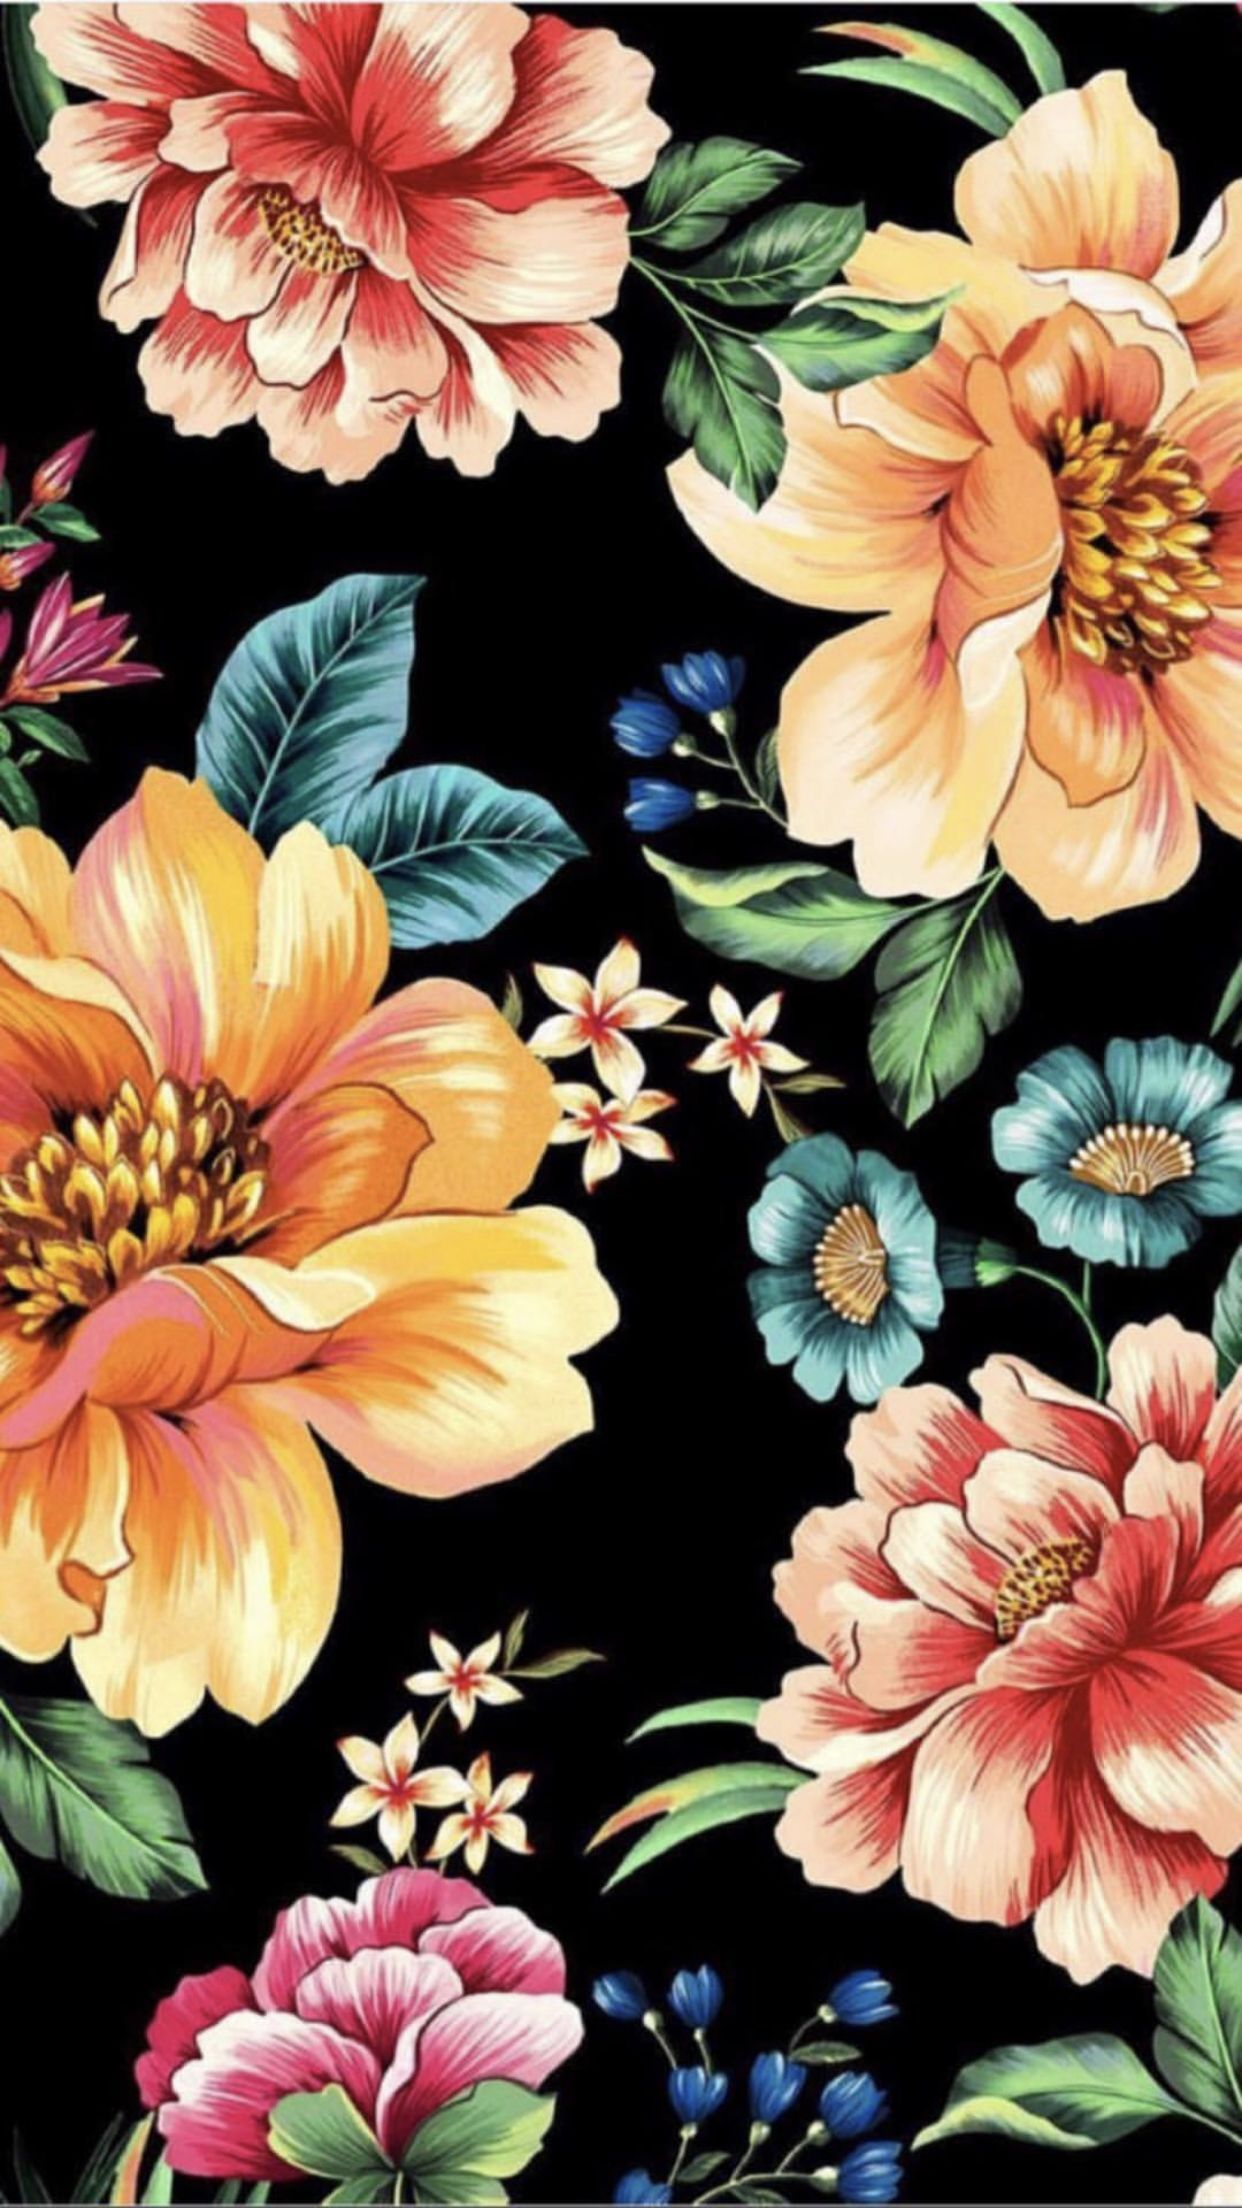 Artistic Flower Wallpapers